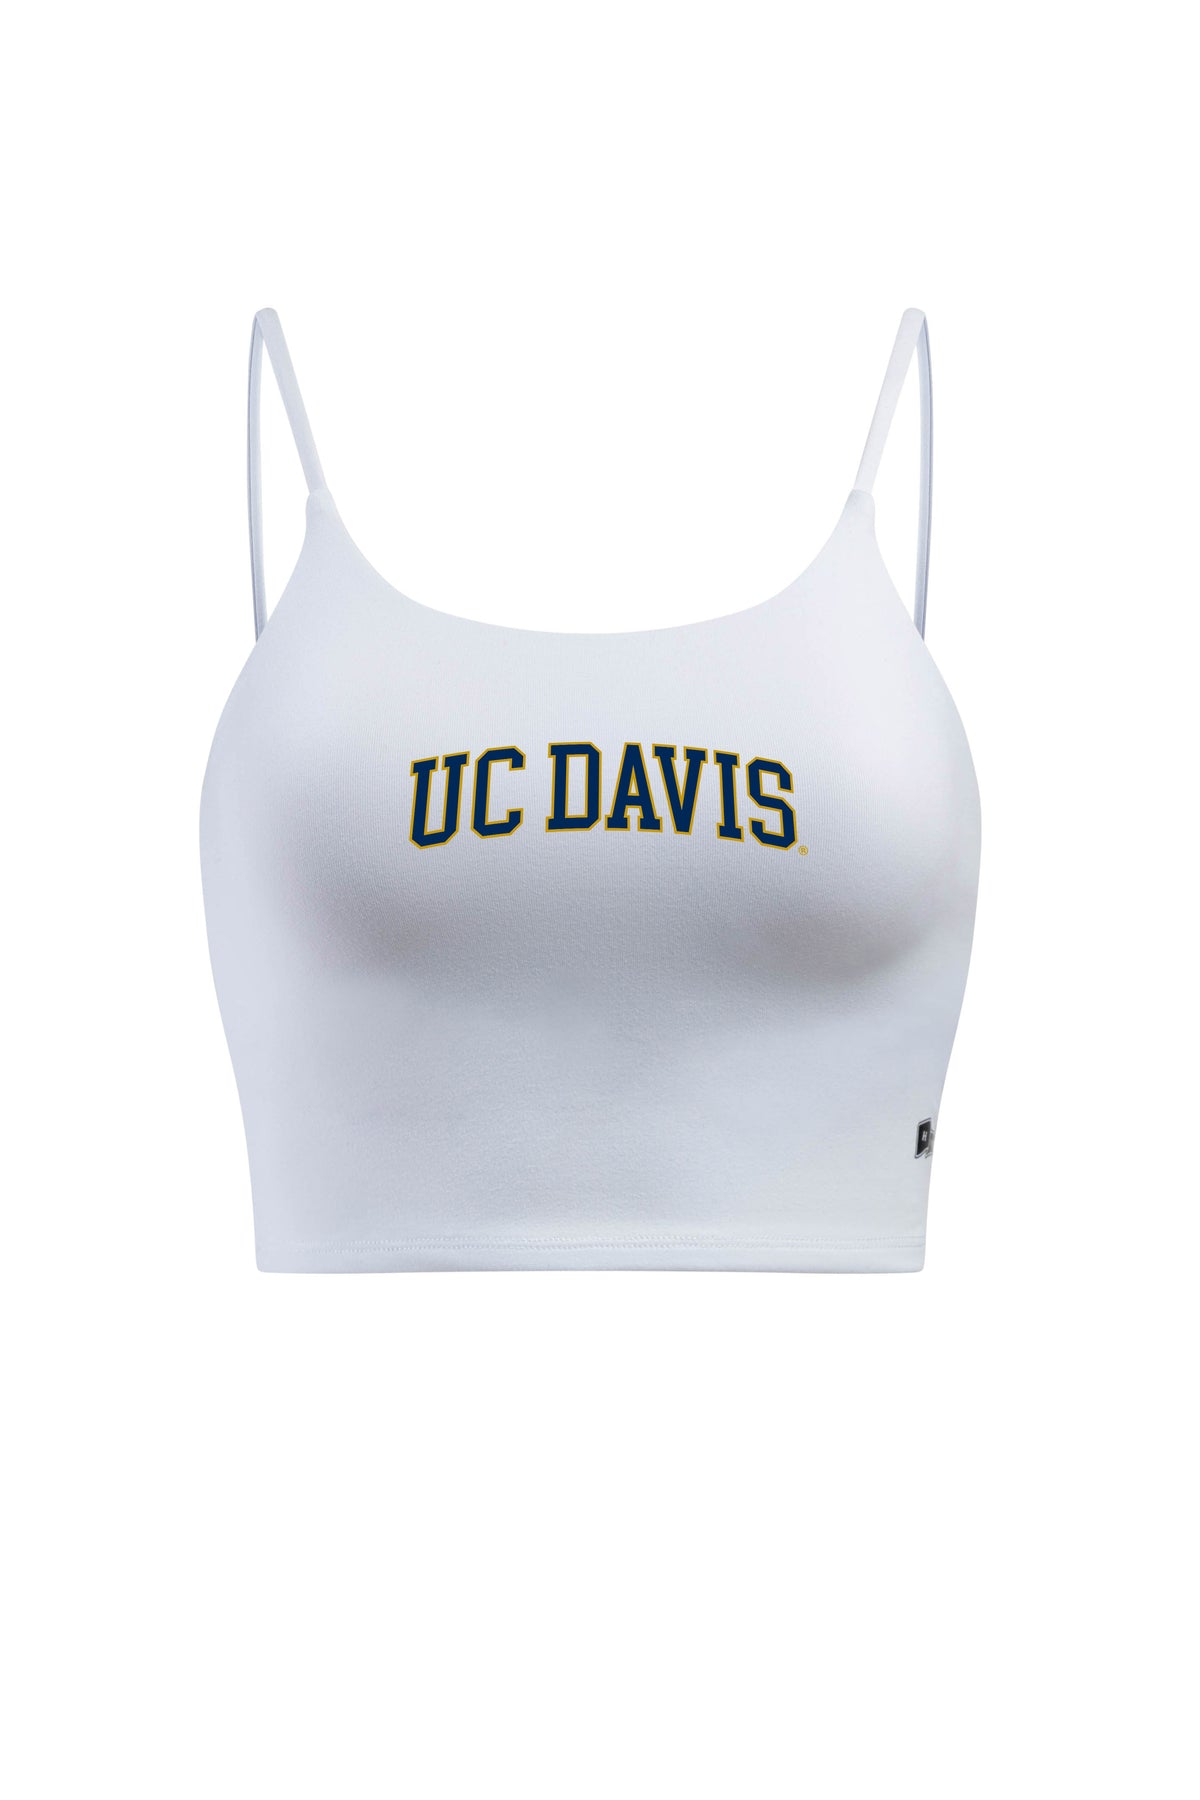 University of California Davis Bra Tank Top